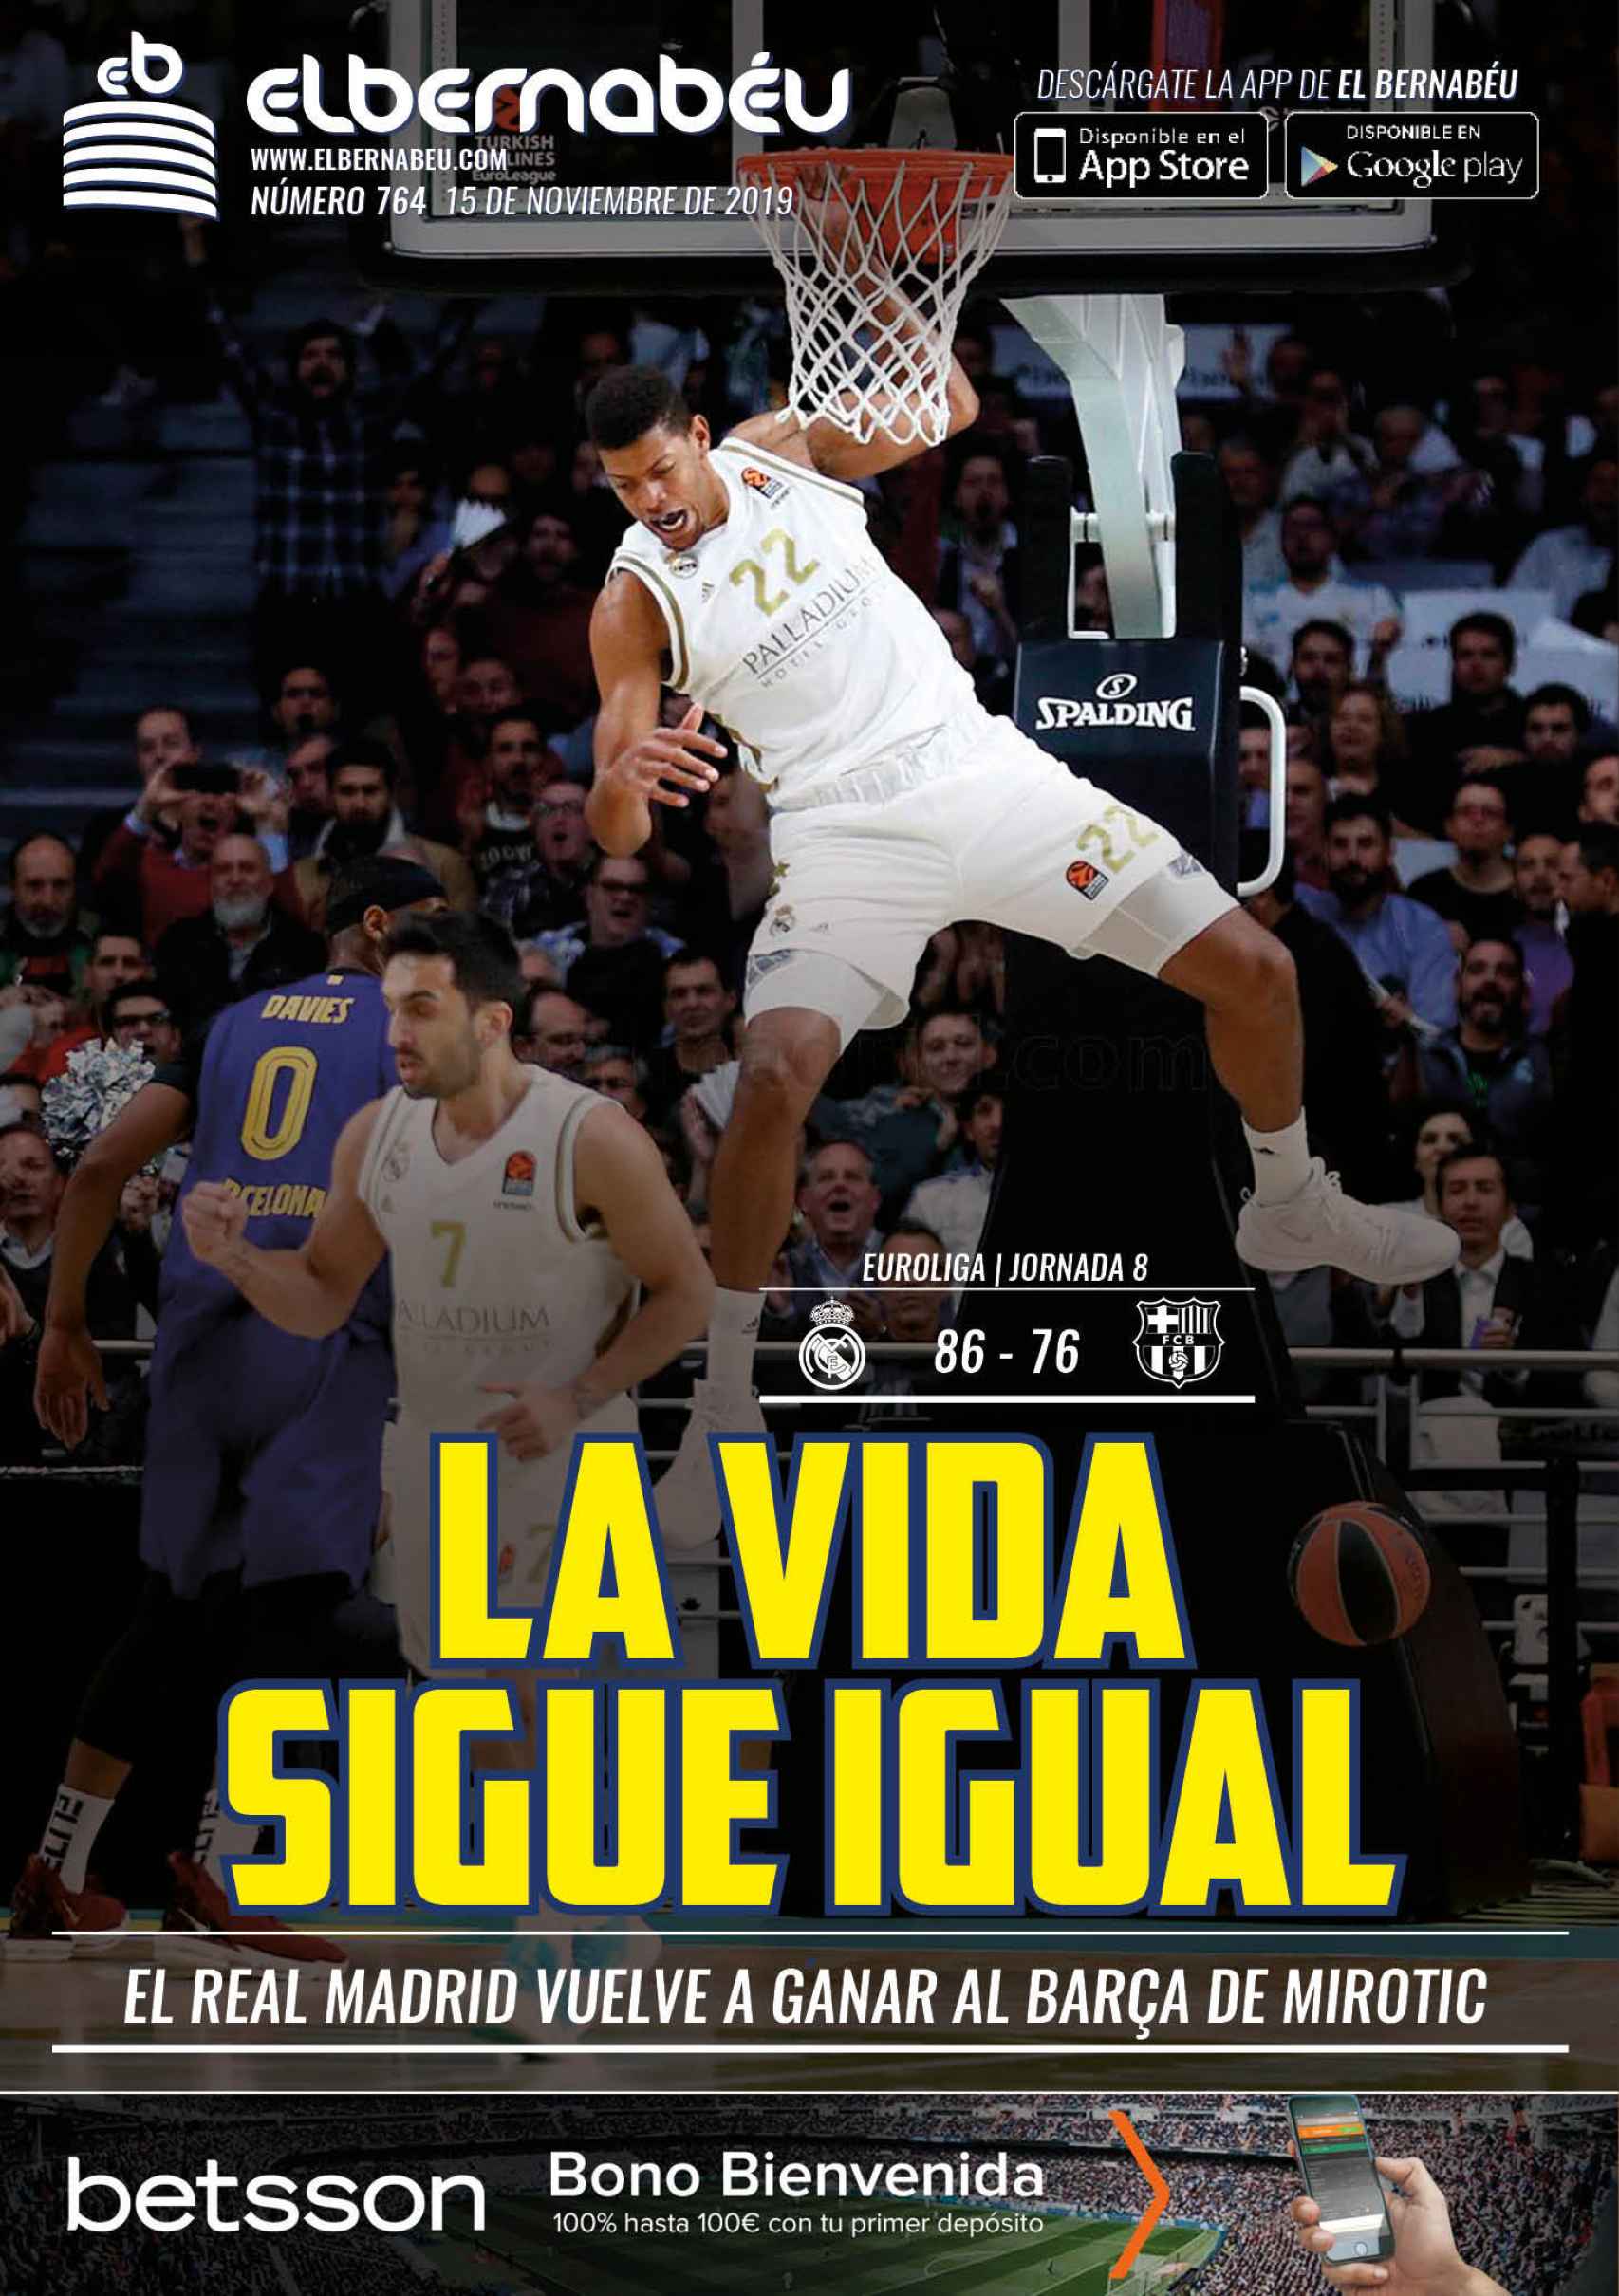 La portada de El Bernabéu (15/11/2019)